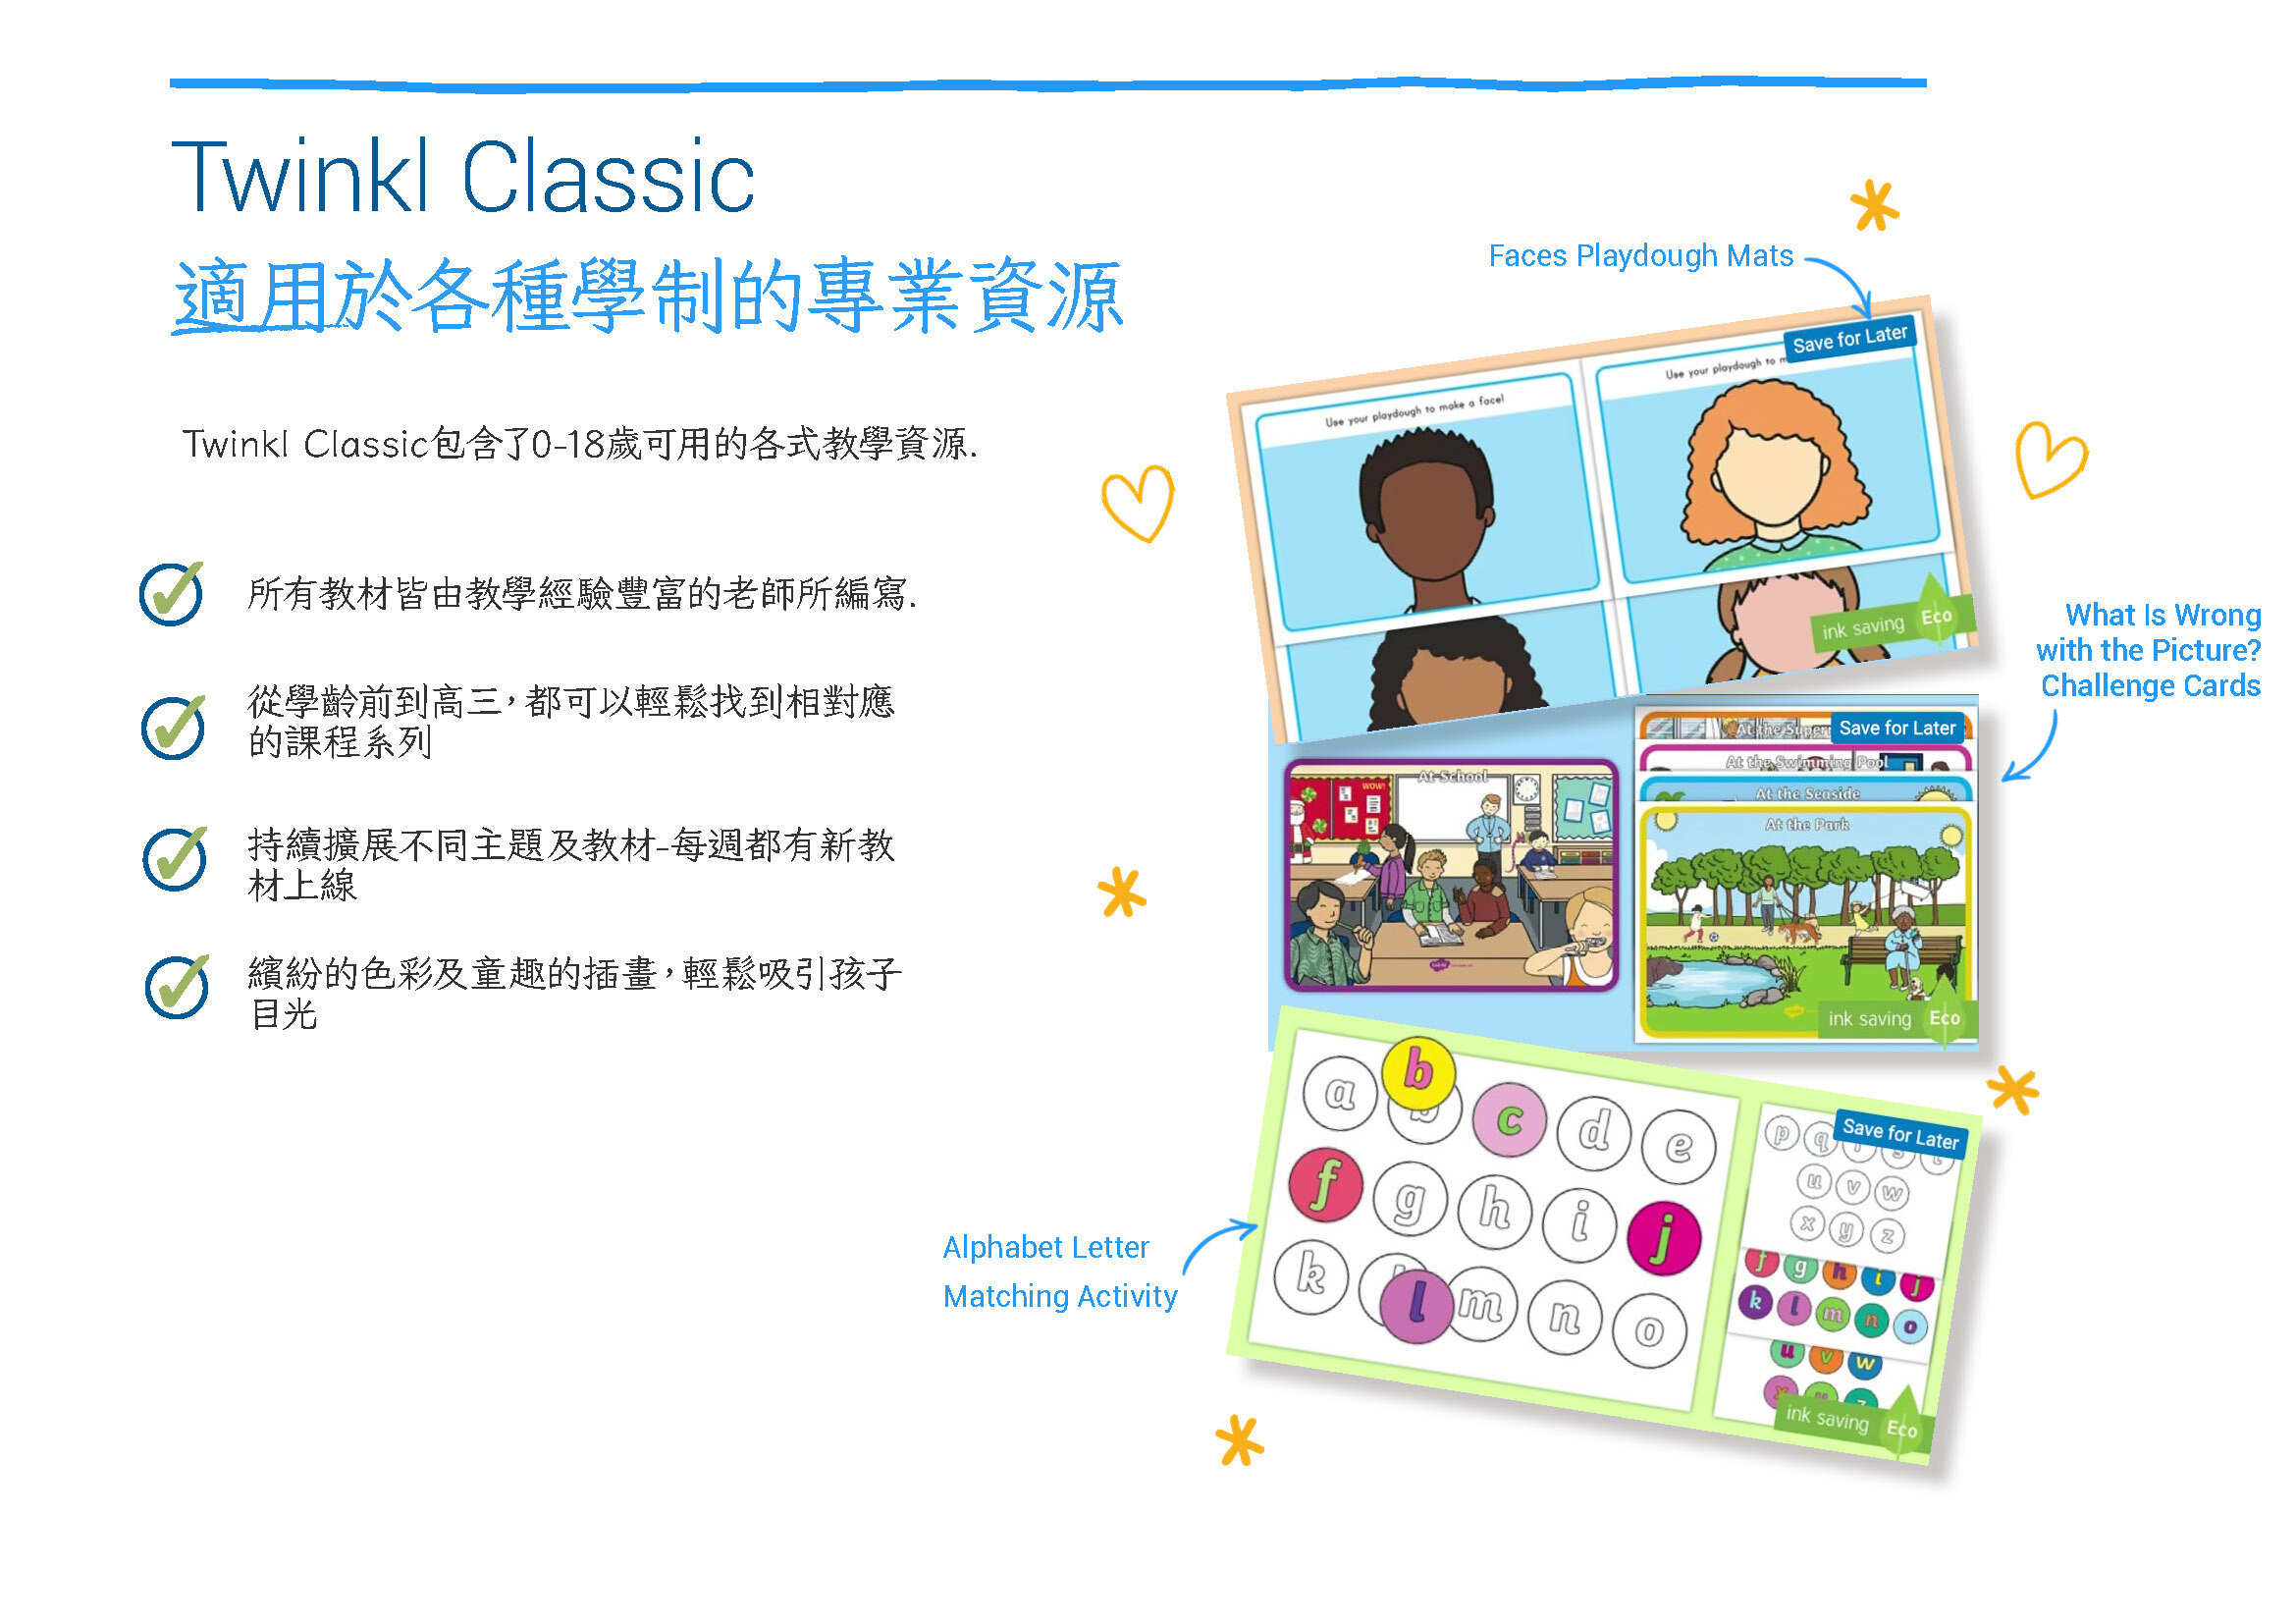 Twinkl Classic 適用於各種學制的專業資源，包含了0-18歲可用的各式教學資源